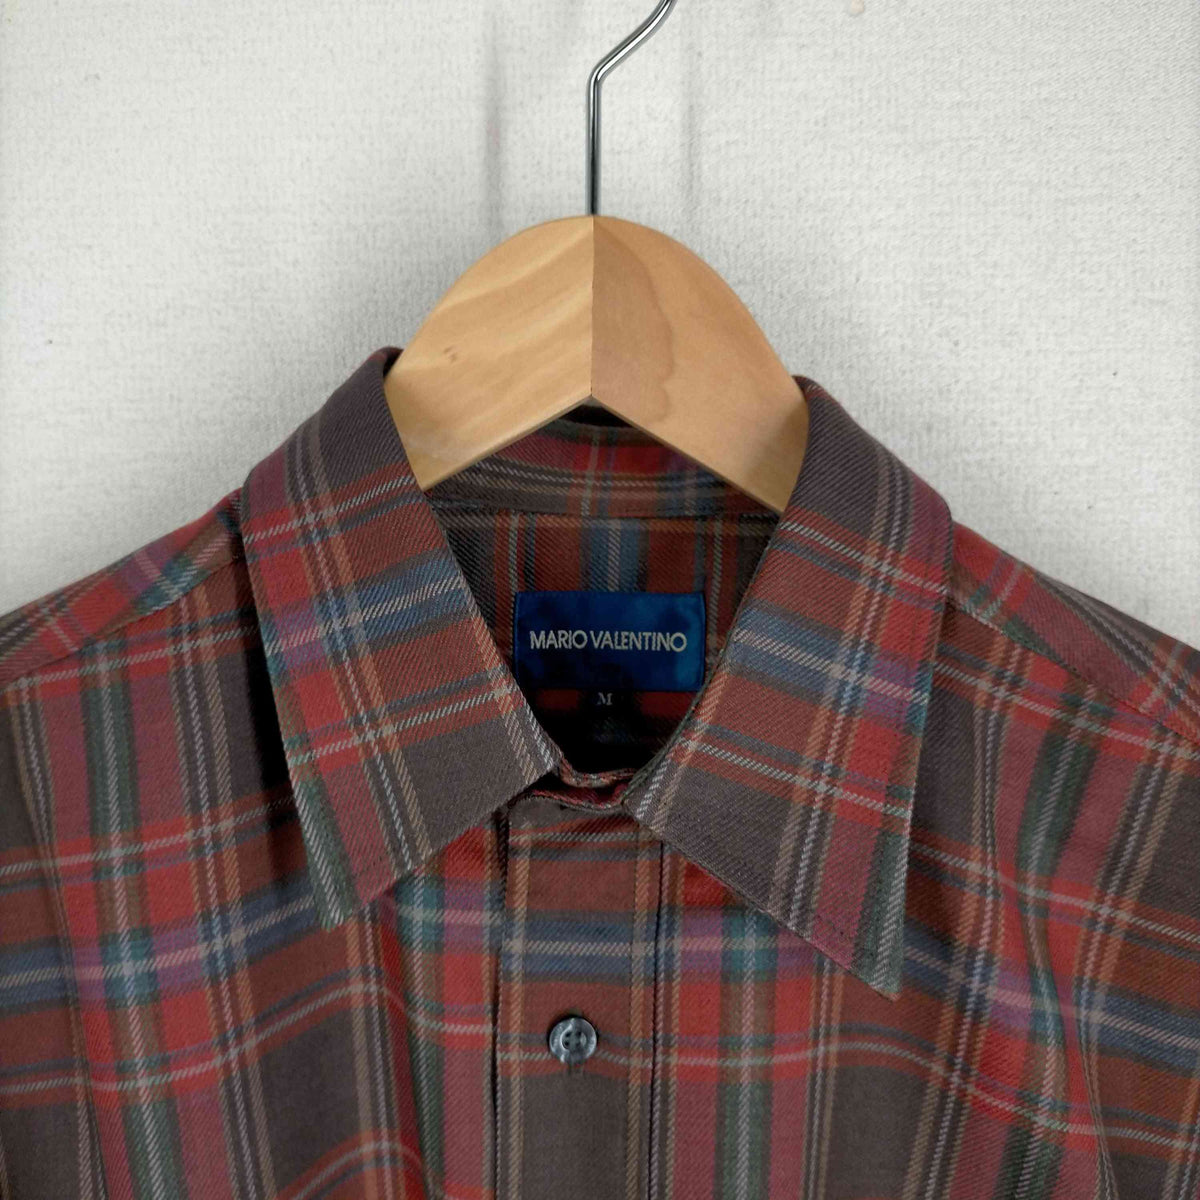 MARIO VALENTINO(マリオバレンチノ)ロングスリーブチェックシャツ